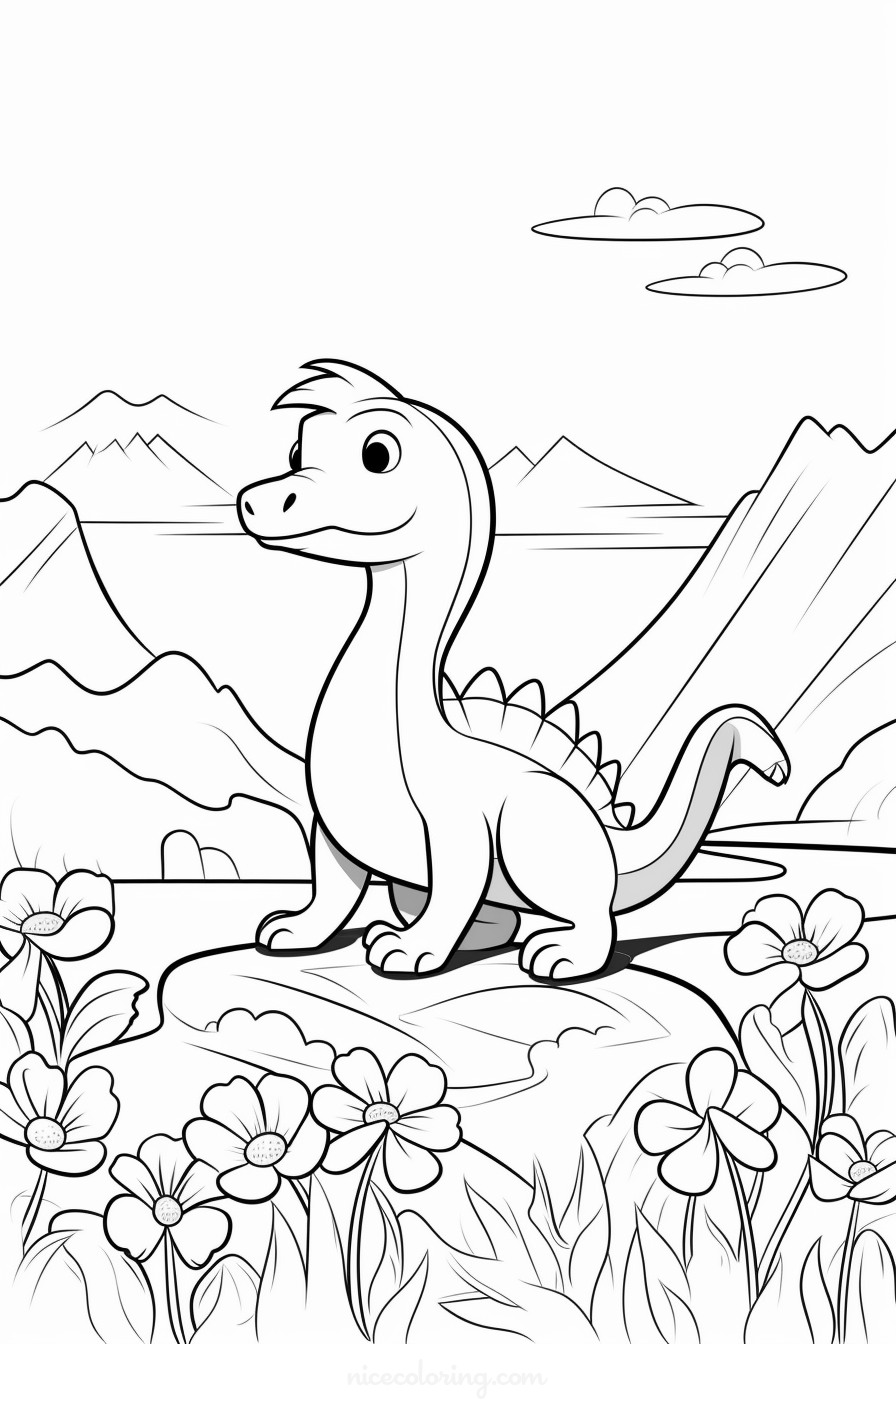 T-Rex dinosaur in a prehistoric landscape